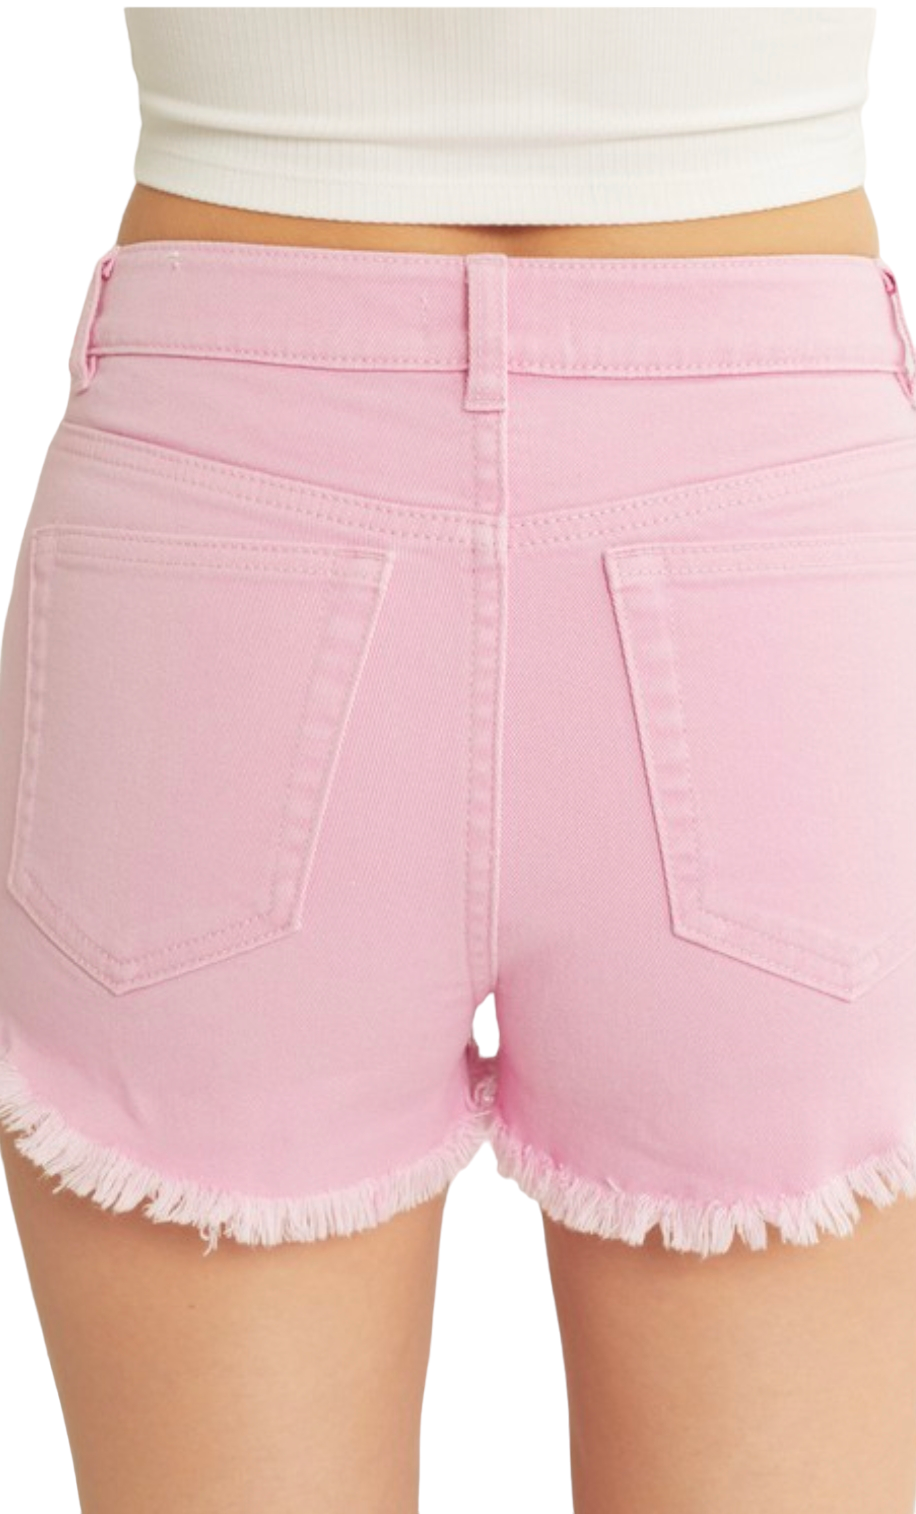 Pink frayed denim shorts